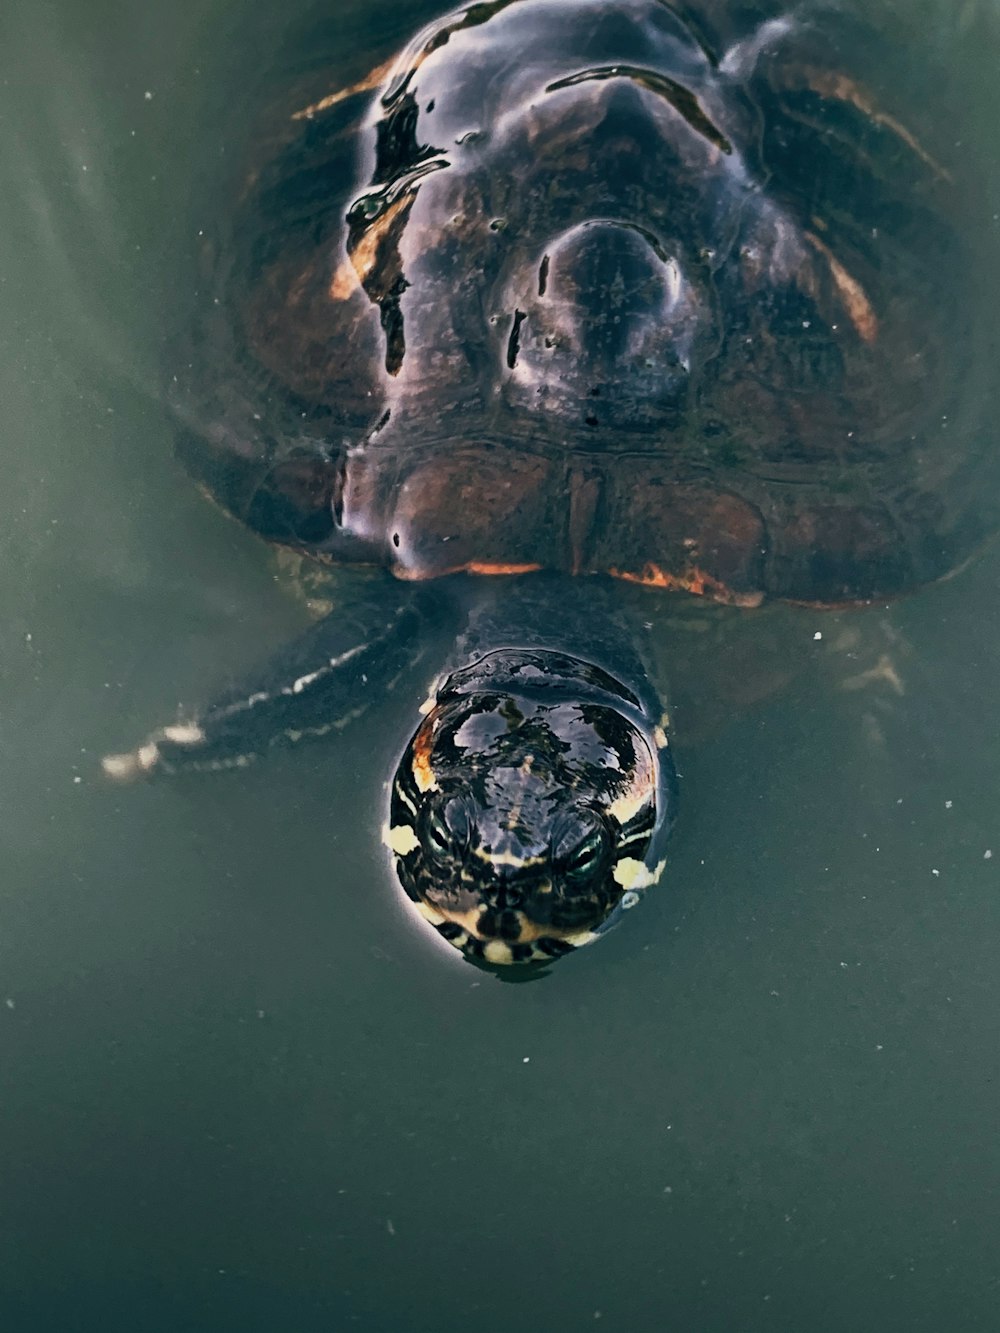 tortuga naranja y negra en el agua